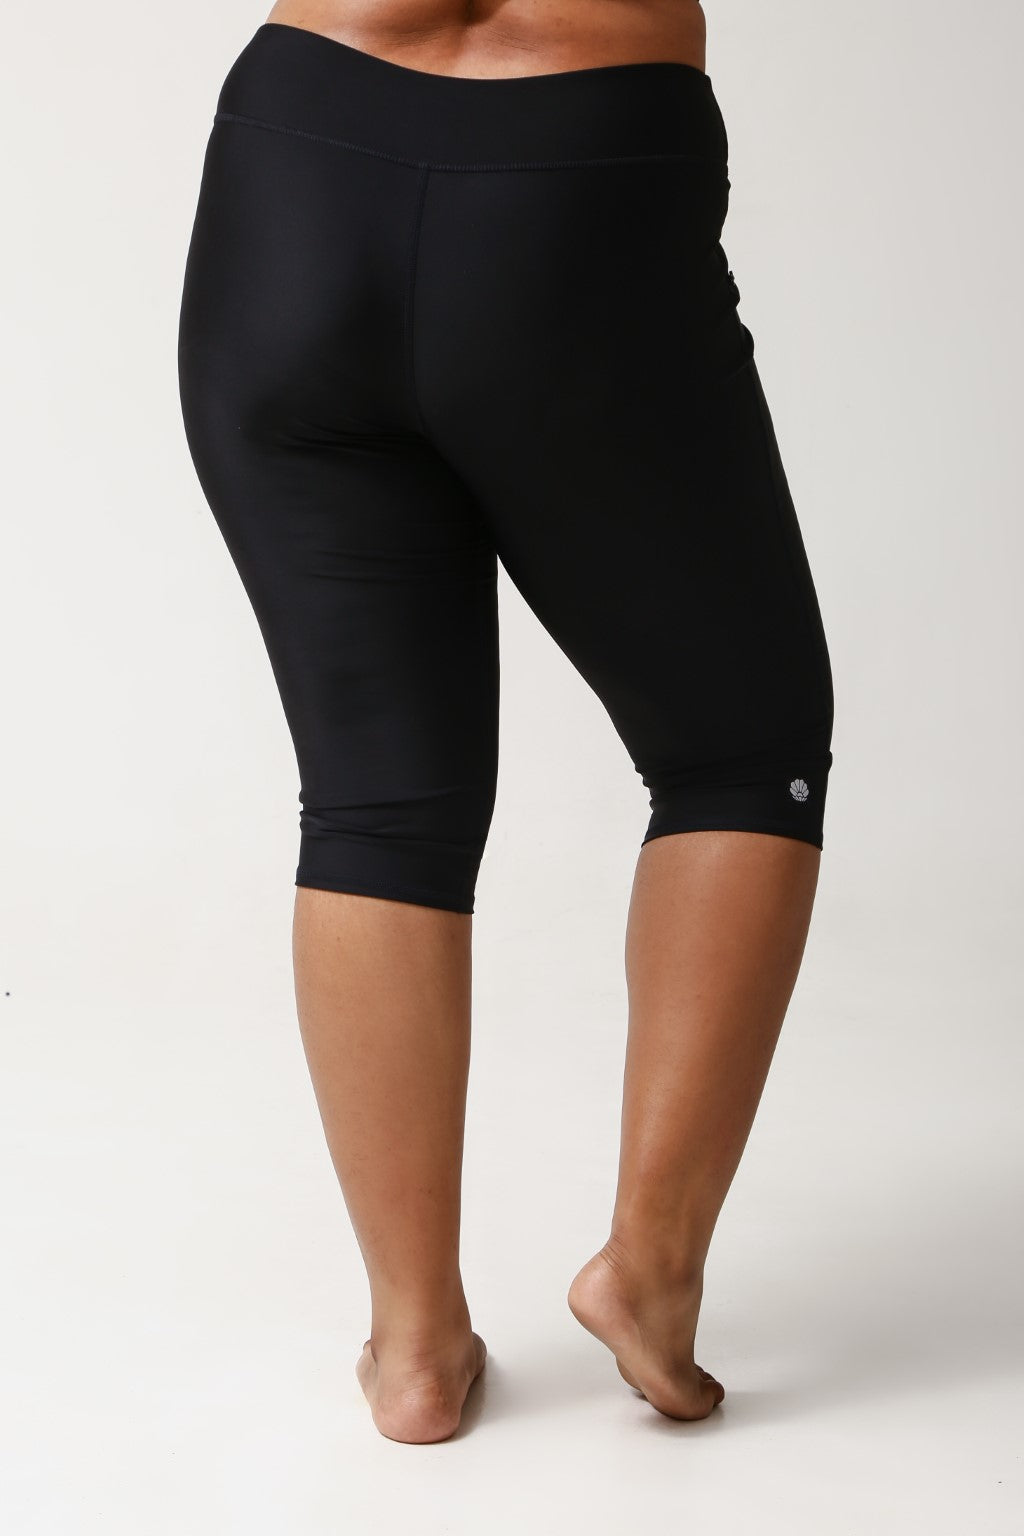 Lanuuk Capri Swim Tights - Black | Cropped Shorts Swimming Leggings Modest Swimwear Burkini